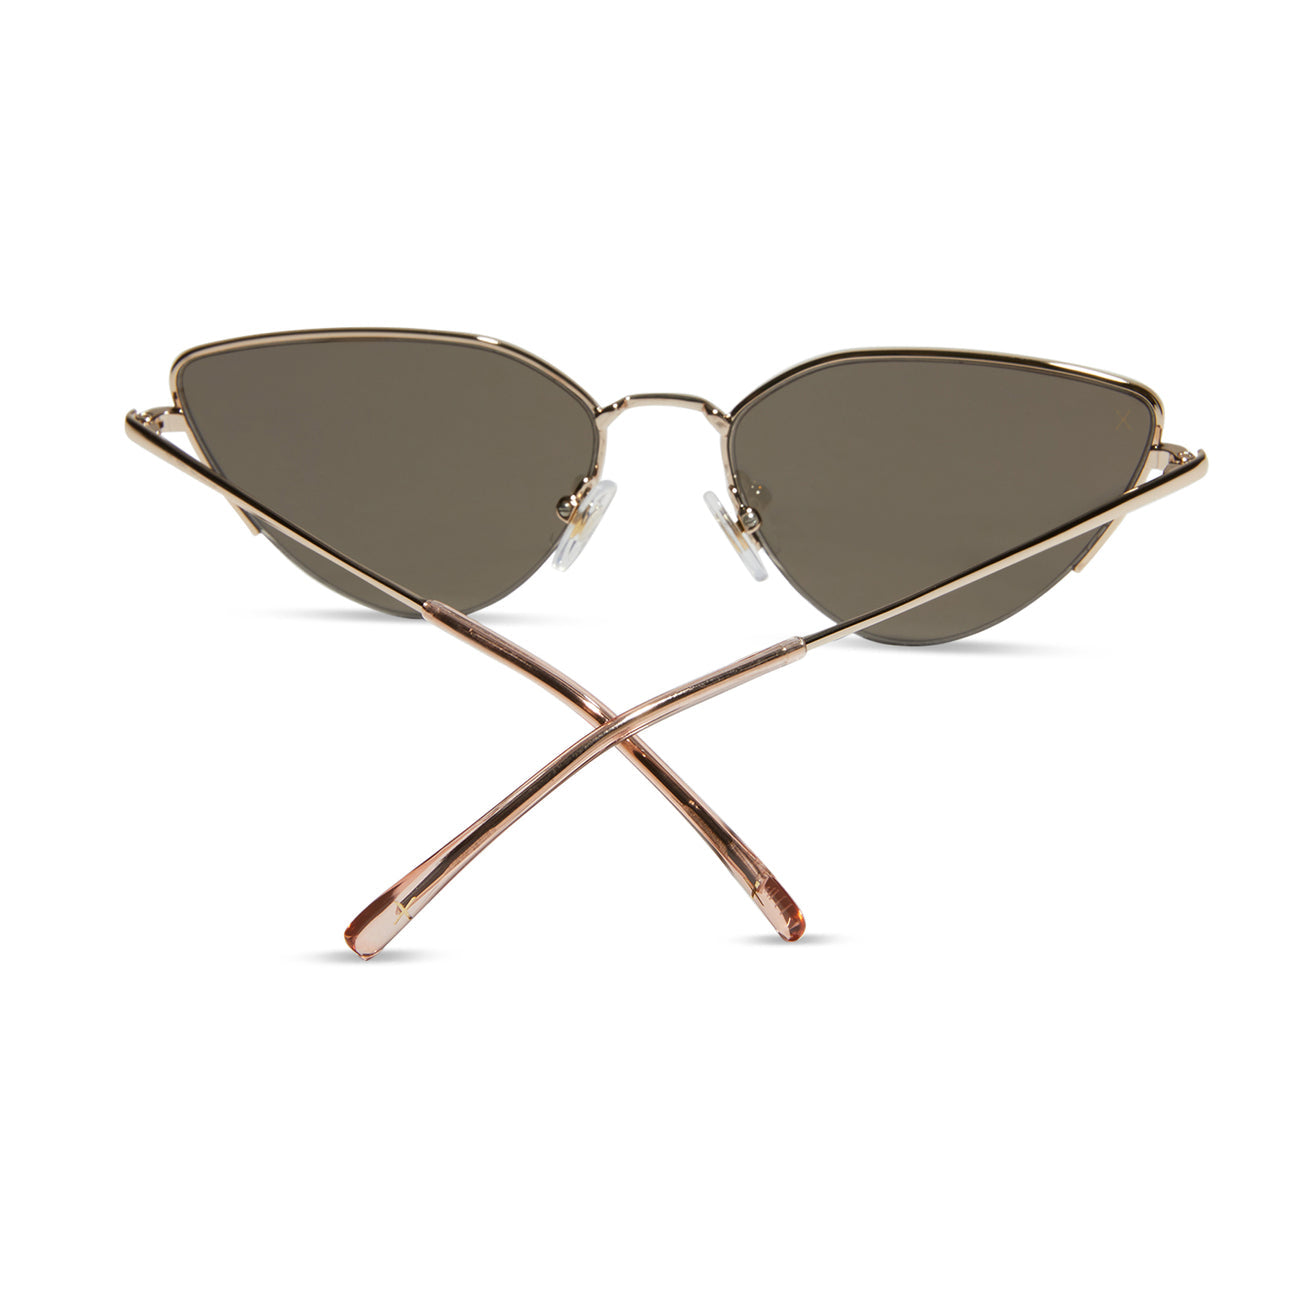 Fairfax Gold + Gold Mirror Sunglasses